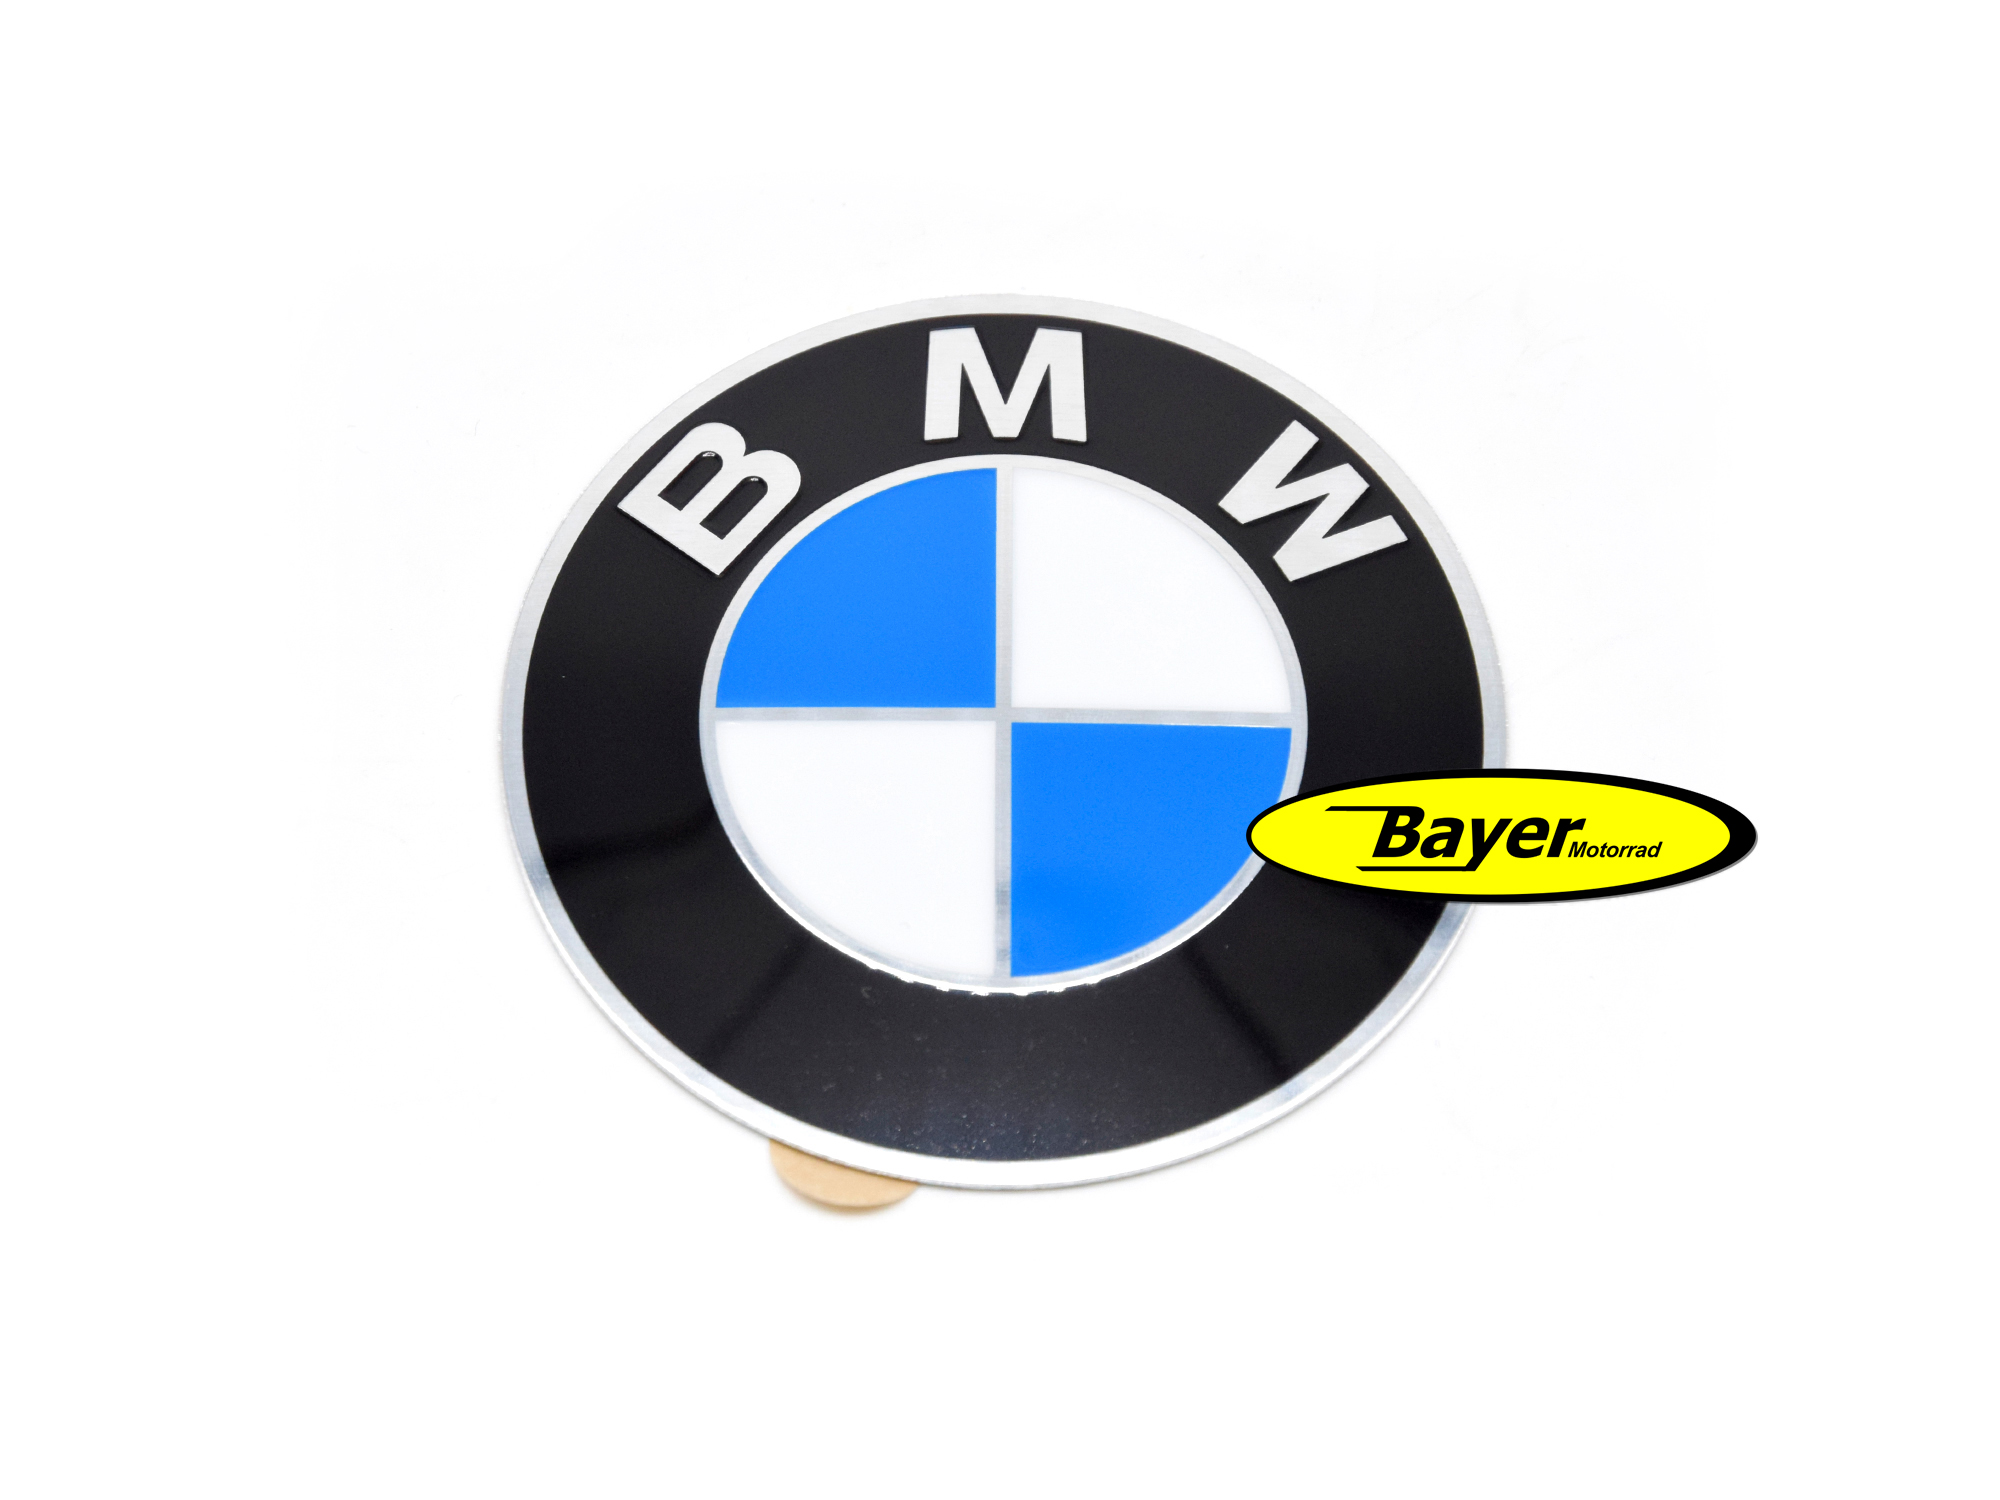 Emblema Bmw Para Moto 70 Mm